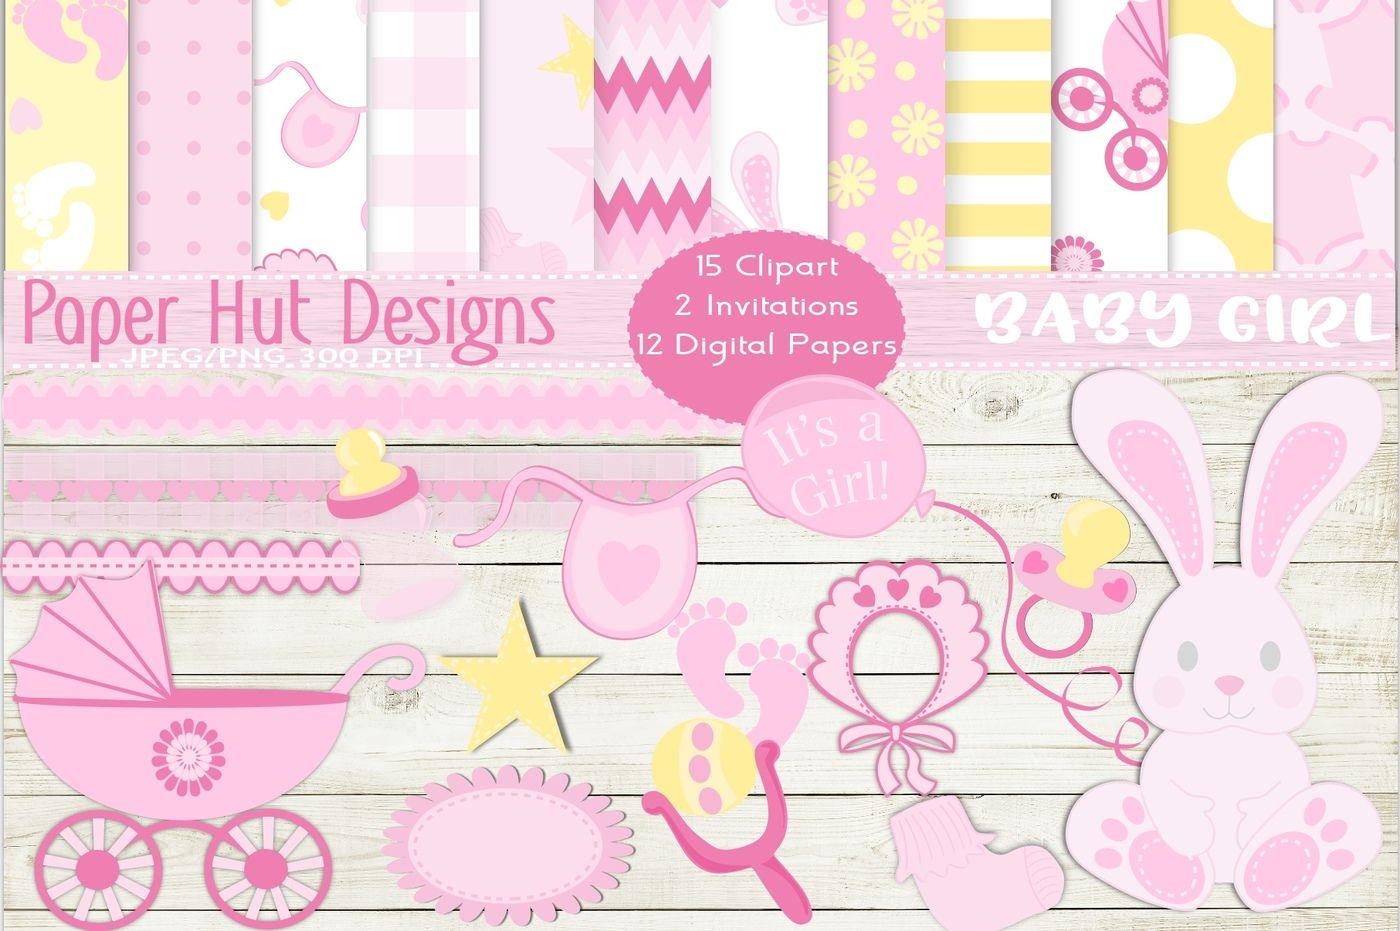 Baby Girl Digital Paper 12 x 12 scrapbook paper pink Texture 12 prin By  DigitalPrintableMe